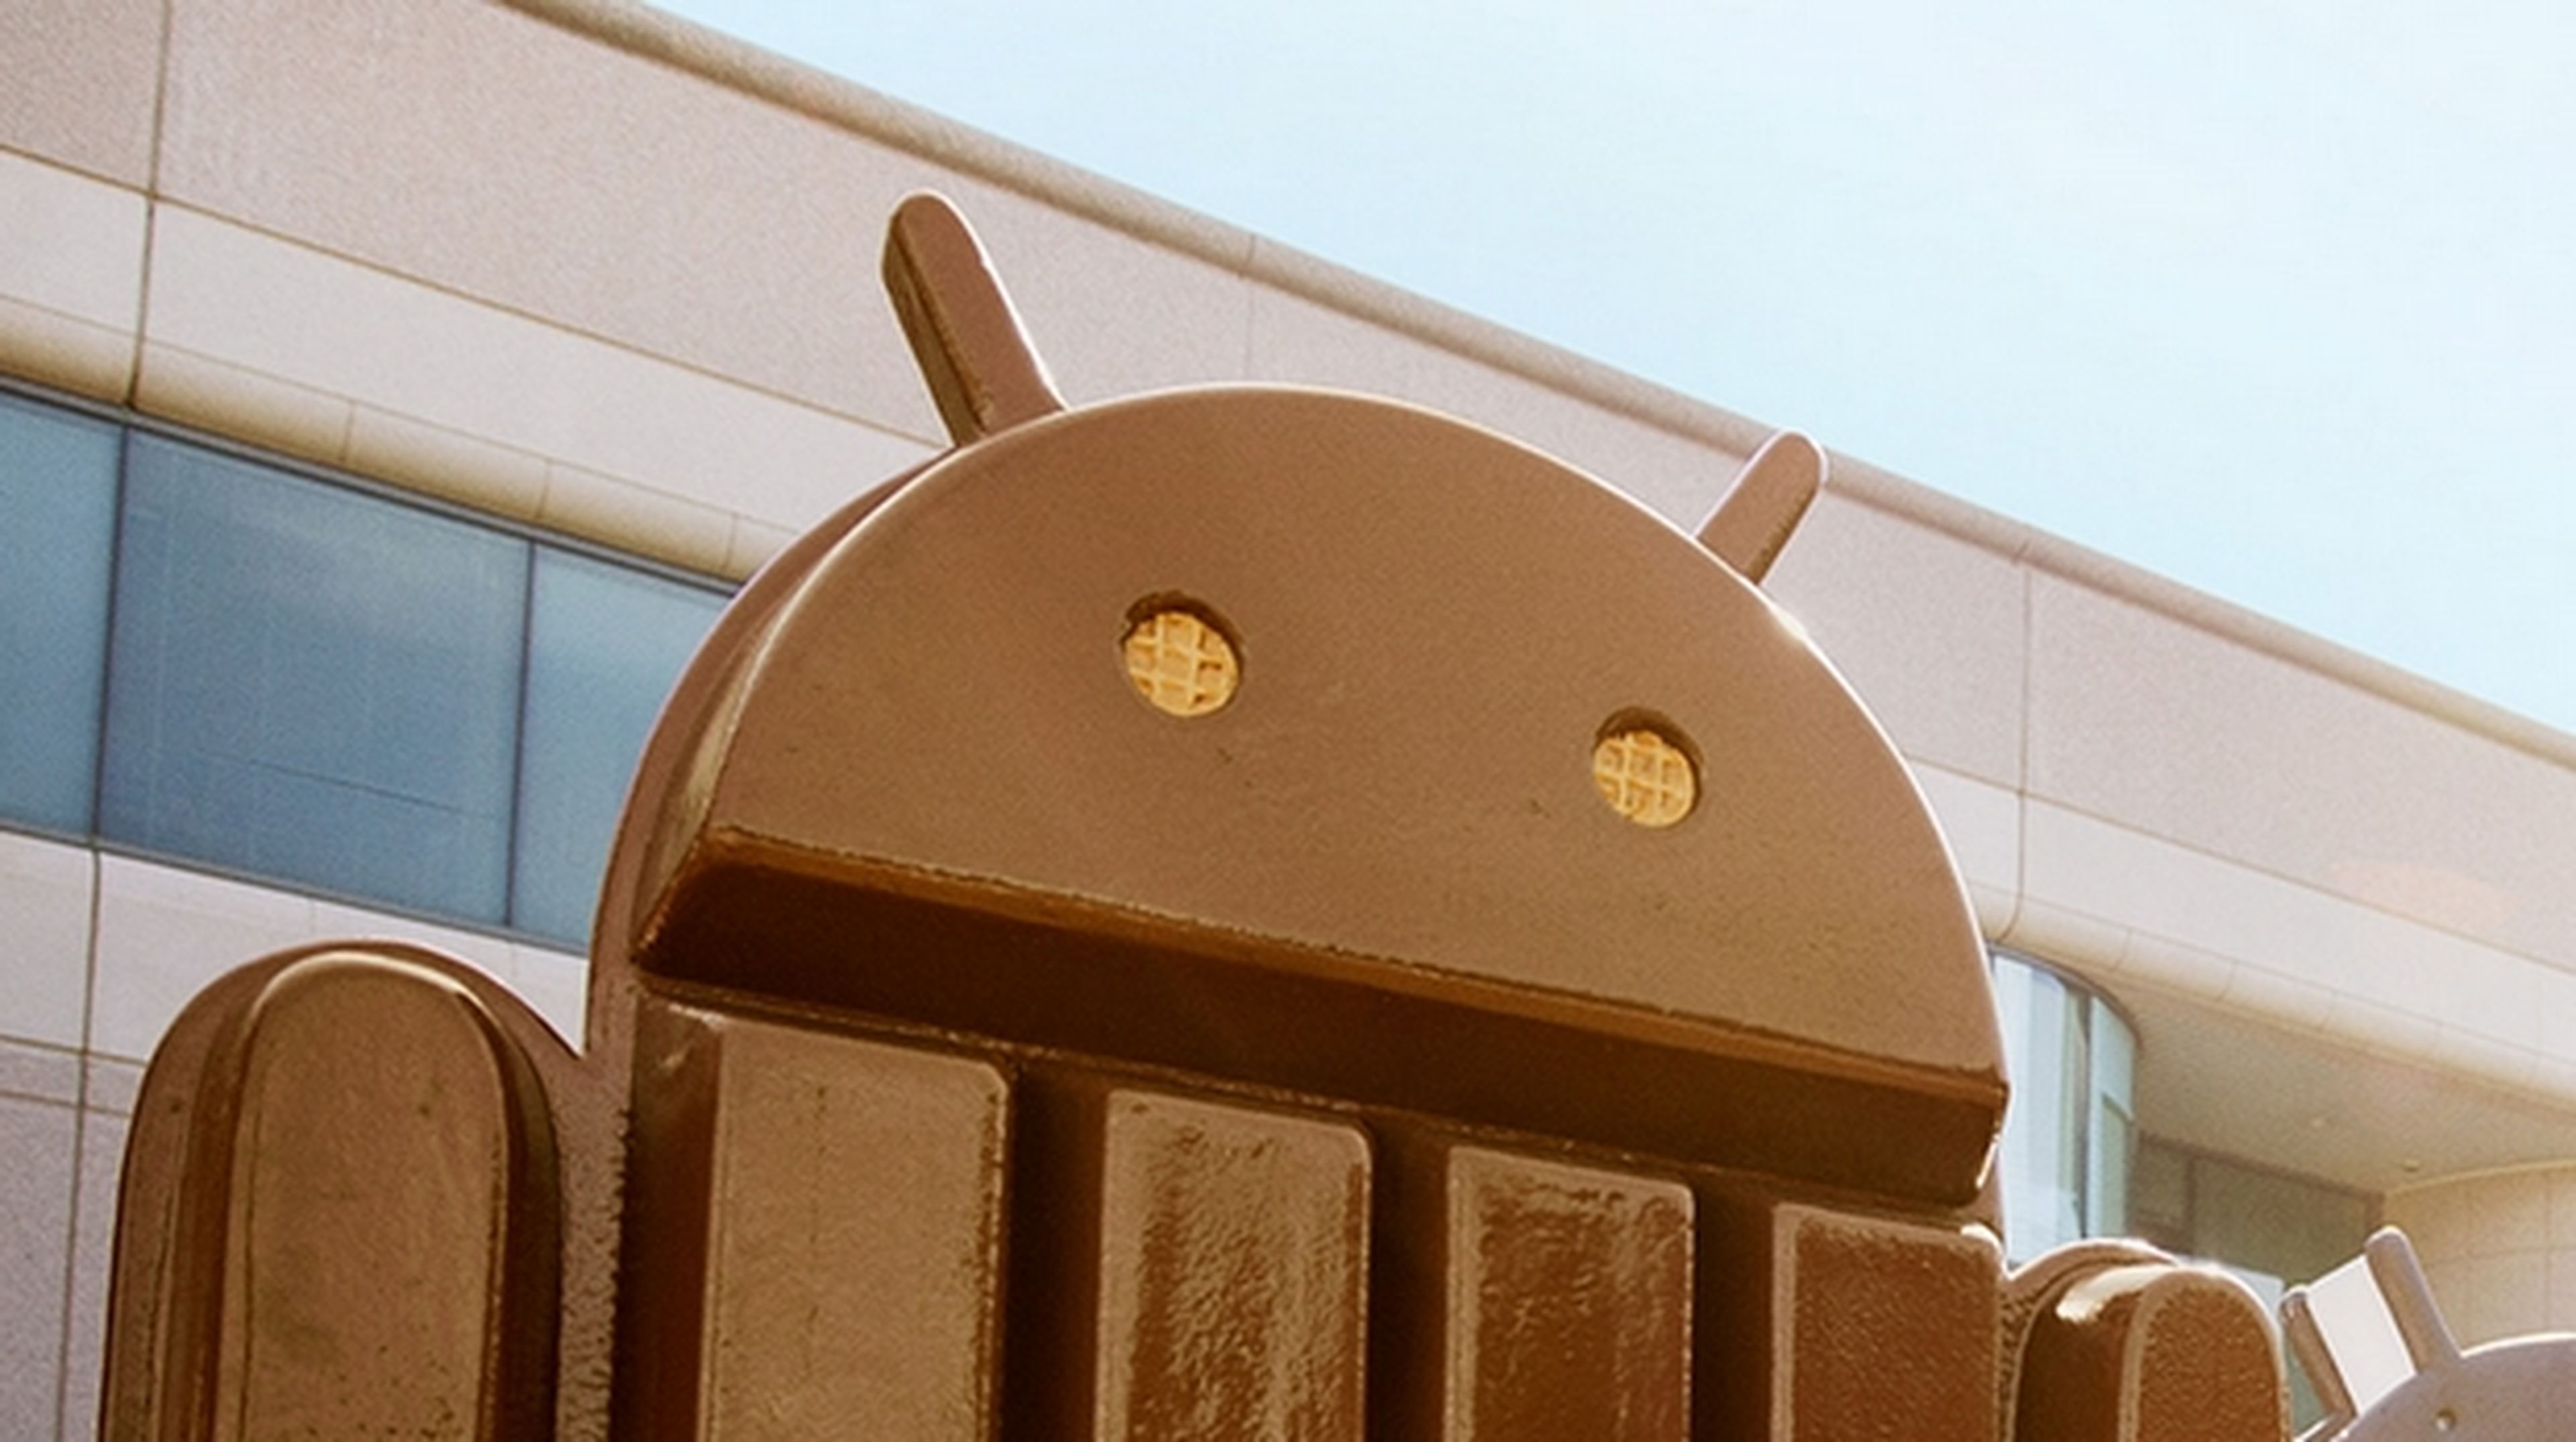 Google anuncia oficialmente Android 4.4 KitKat